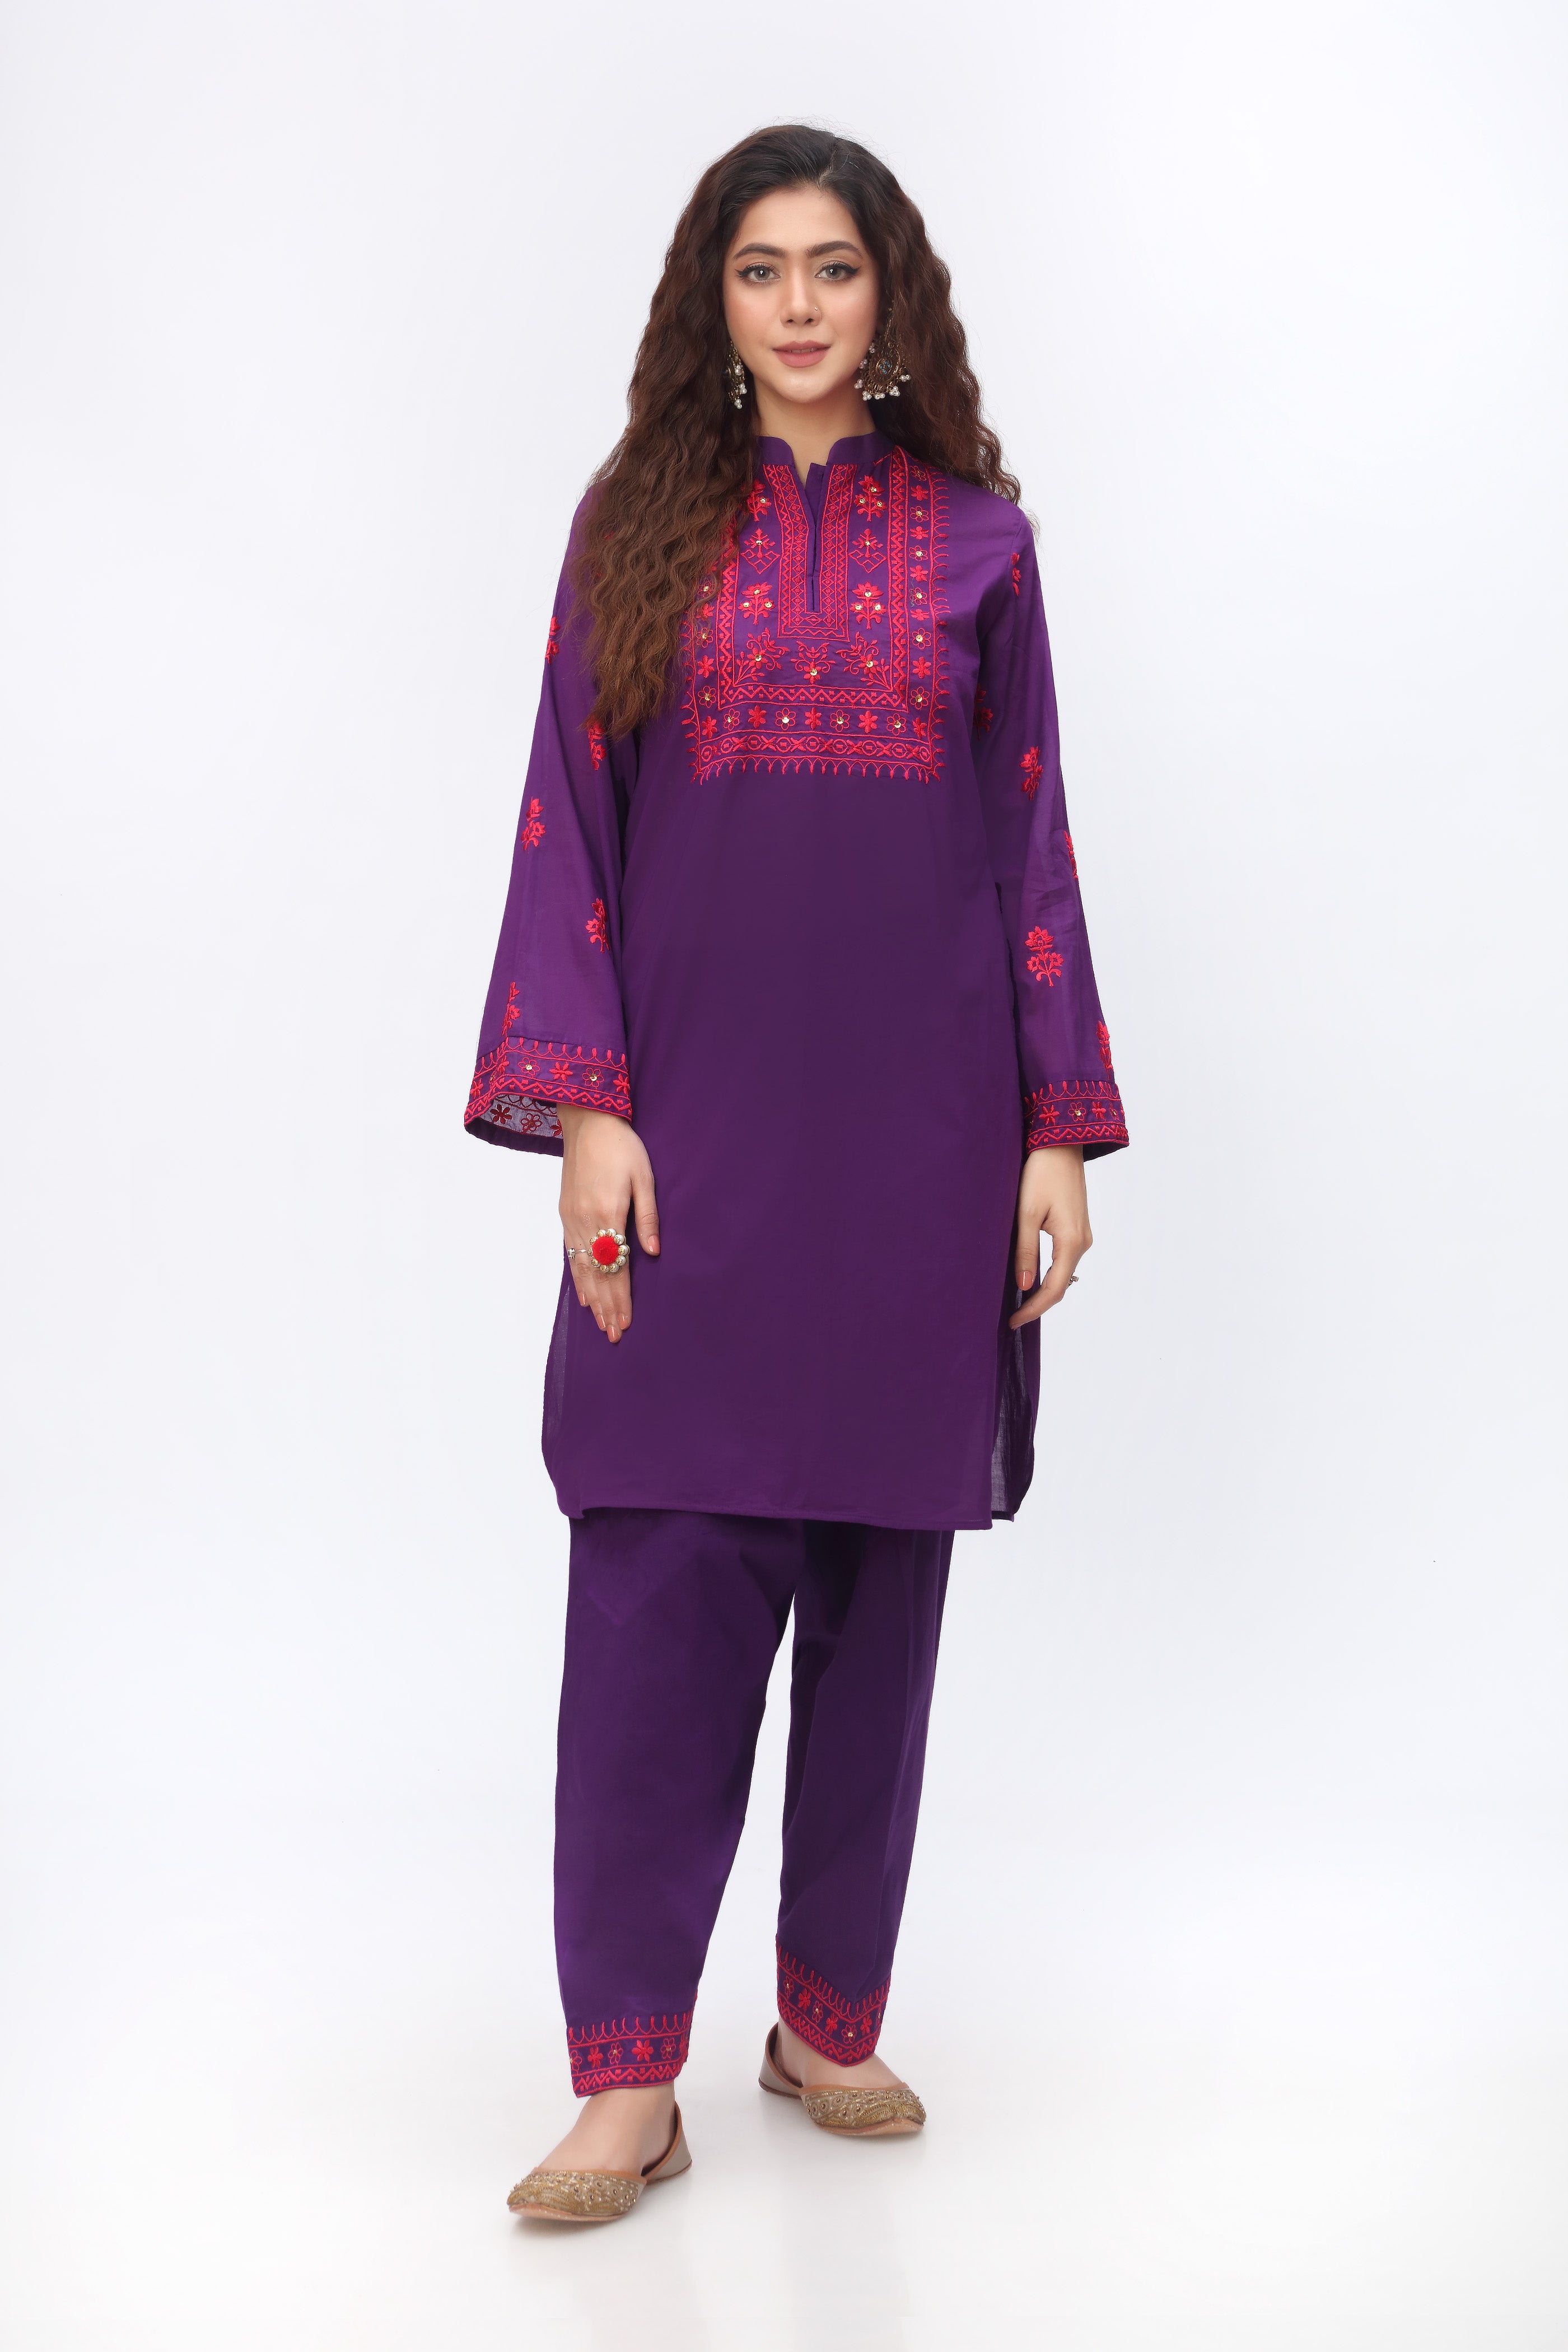 Ethnic Vibe in Purple coloured Lawn fabric